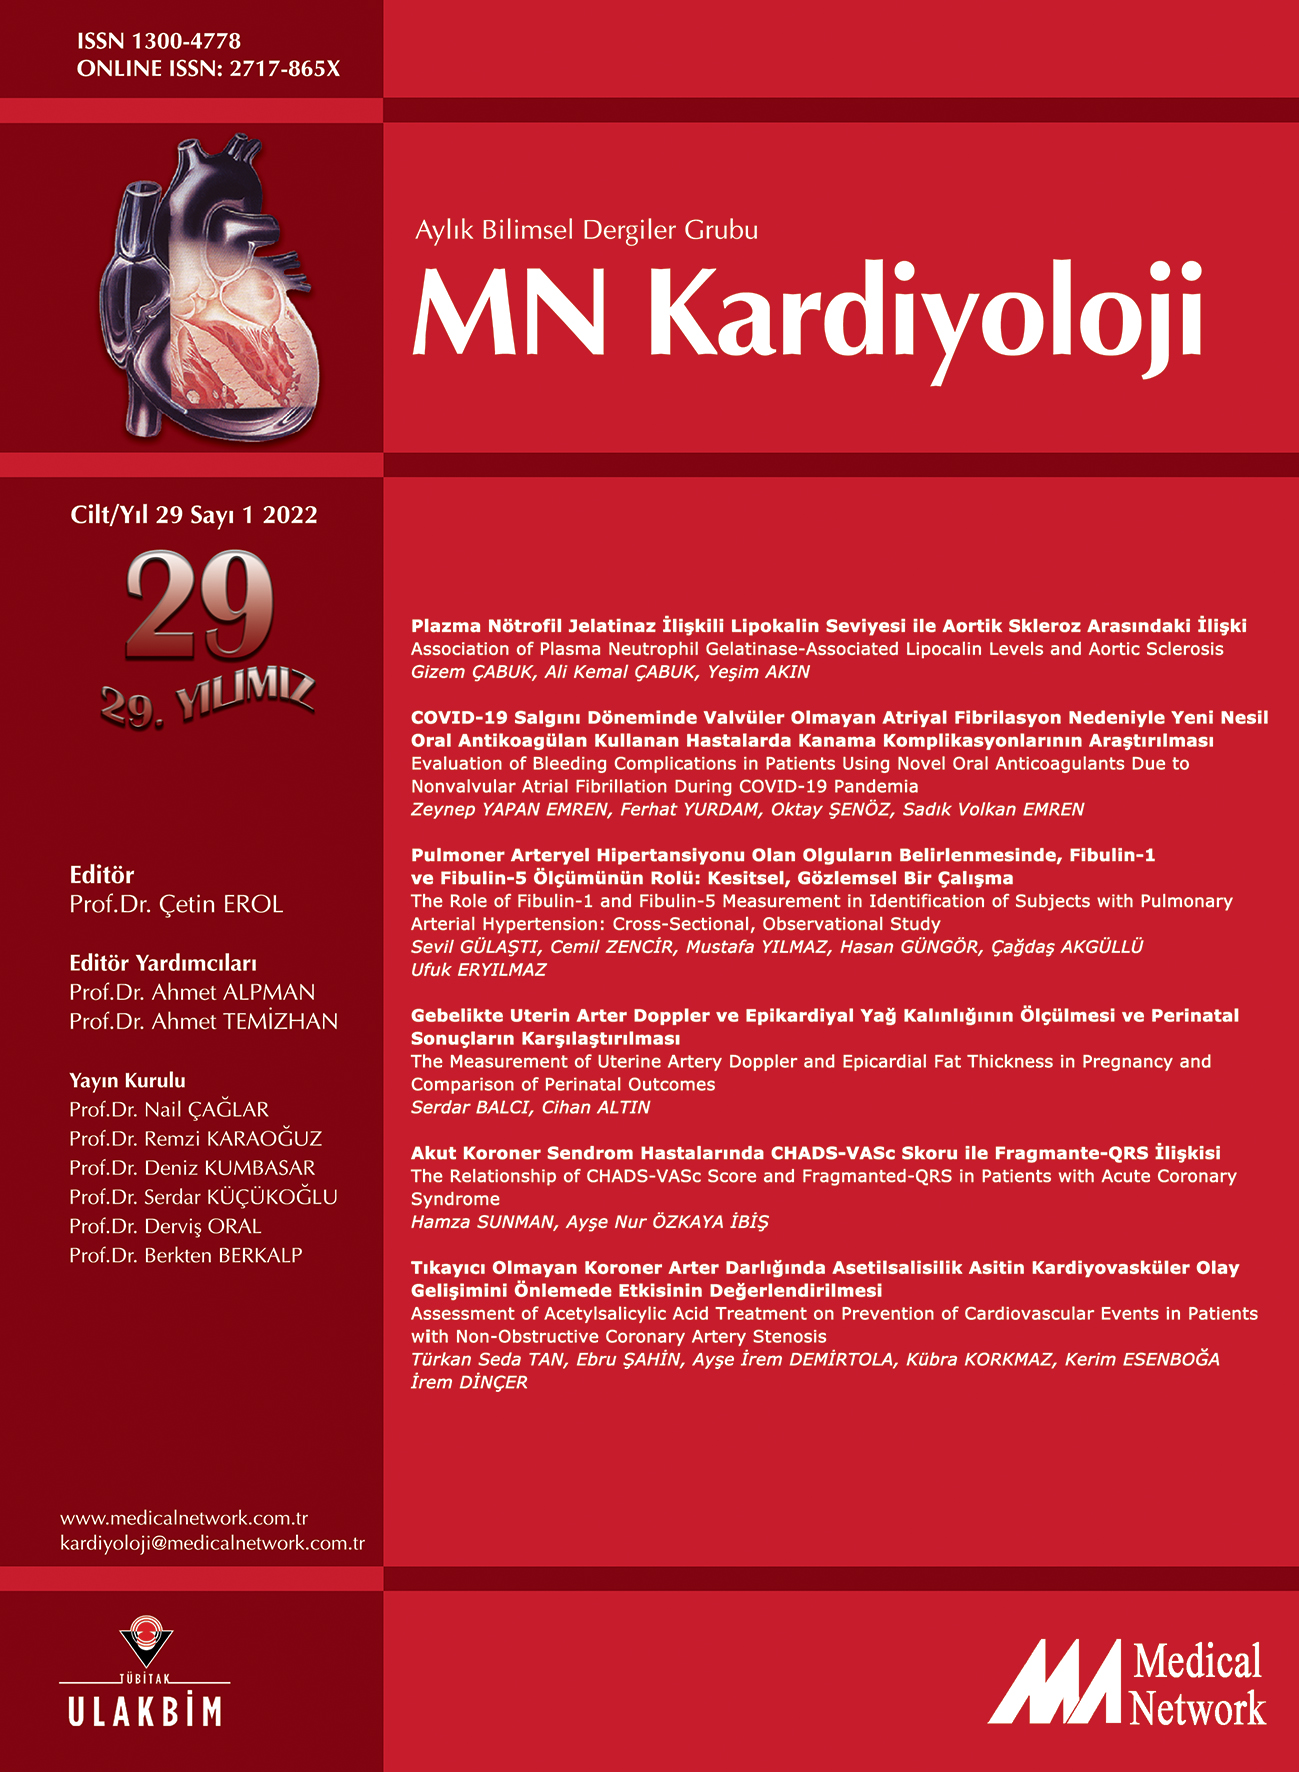 <p>MN Kardiyoloji Cilt: 29 Say: 1 2022 MN Cardiology Volume: 29 No: 1 2022</p>